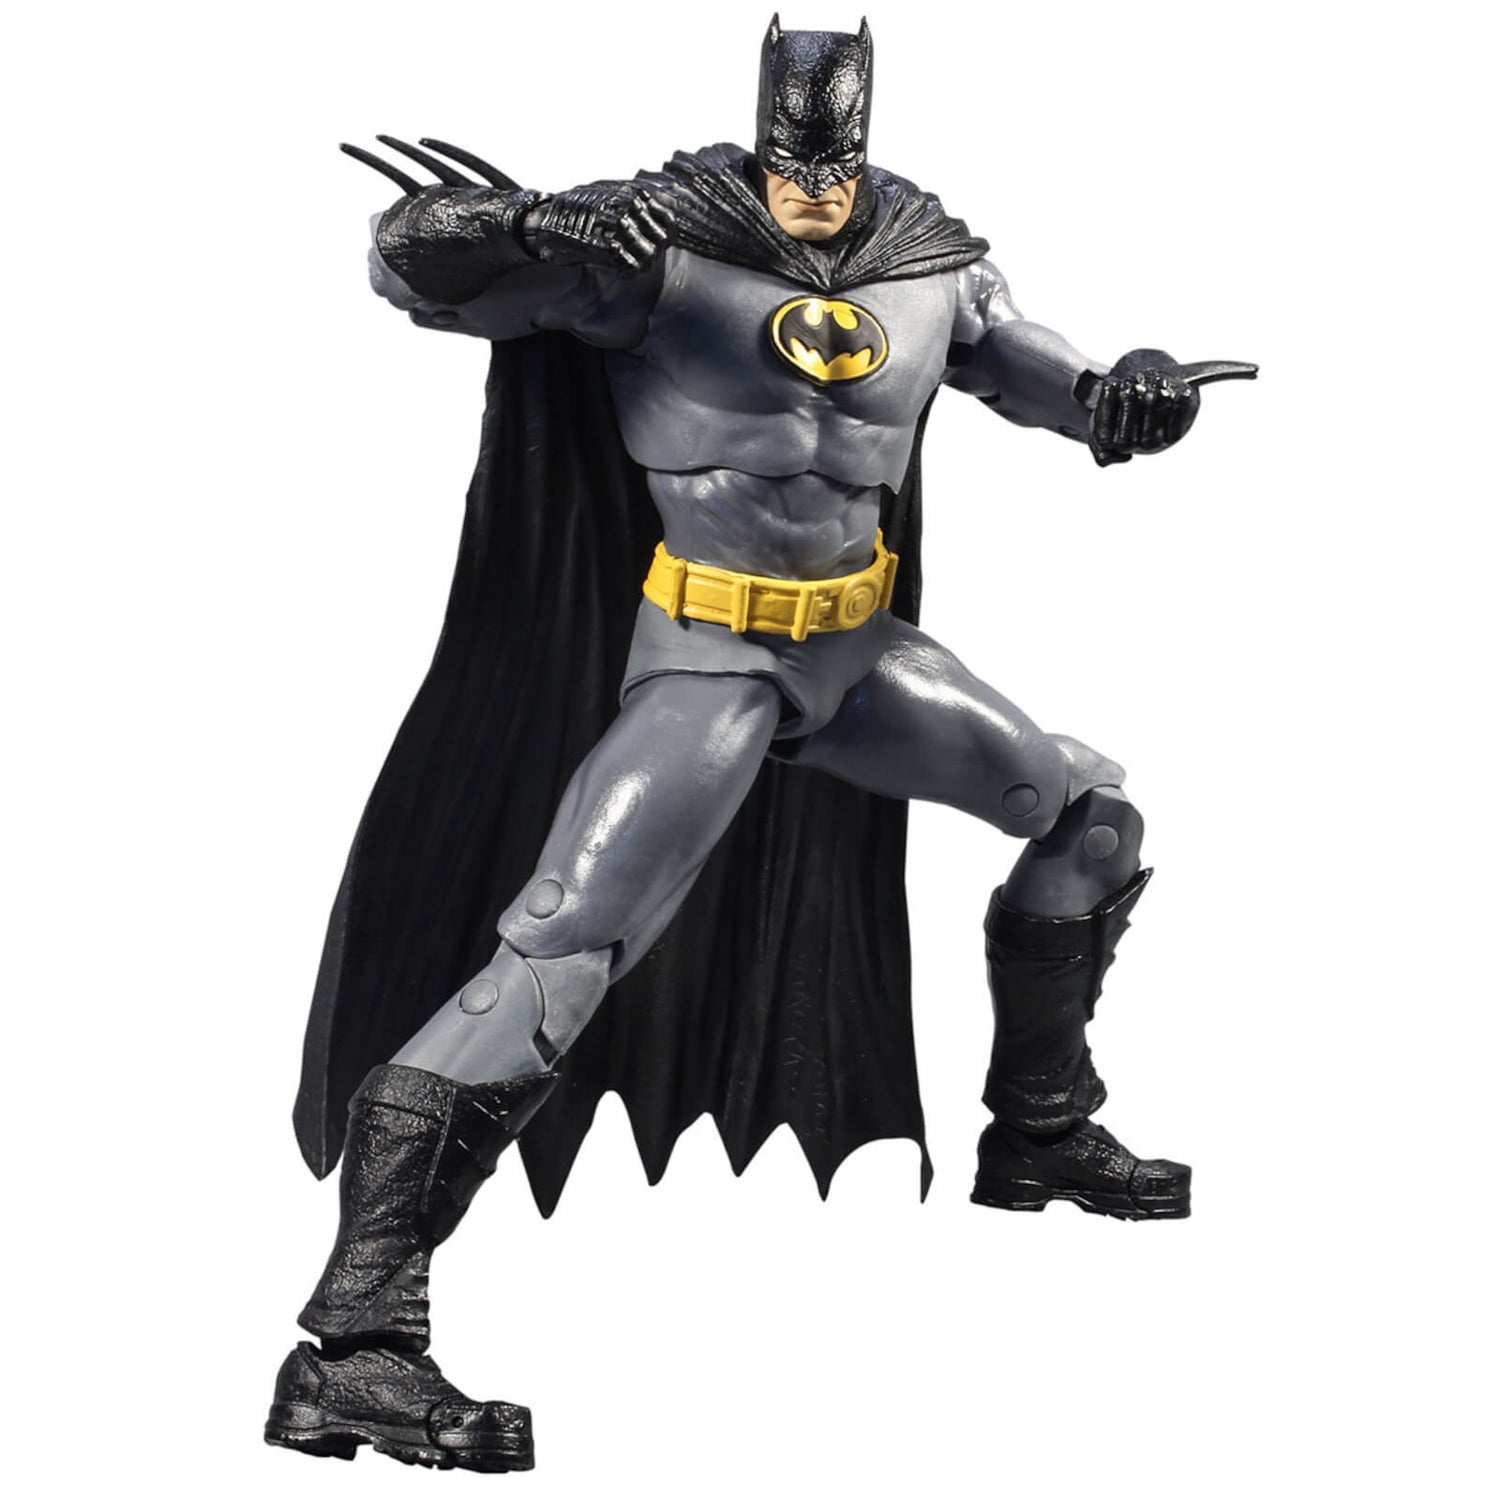 Figurine Batman vs Joker – Boutique Héros France®